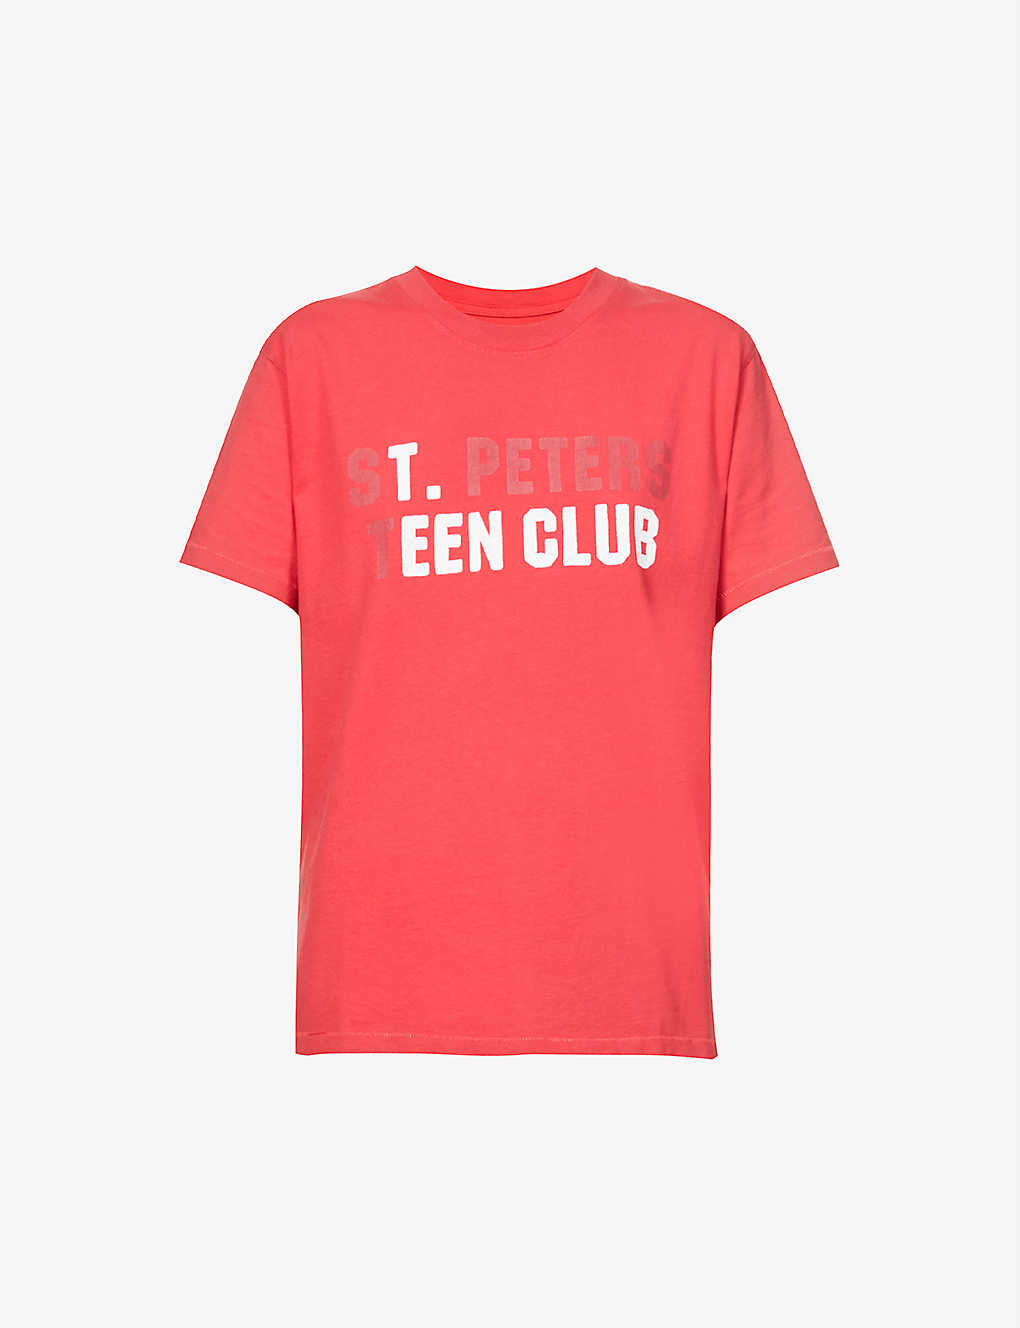 Teen Club text-print cotton-jersey T-shirt Selfridges & Co Girls Clothing T-shirts Short Sleeved T-Shirts 